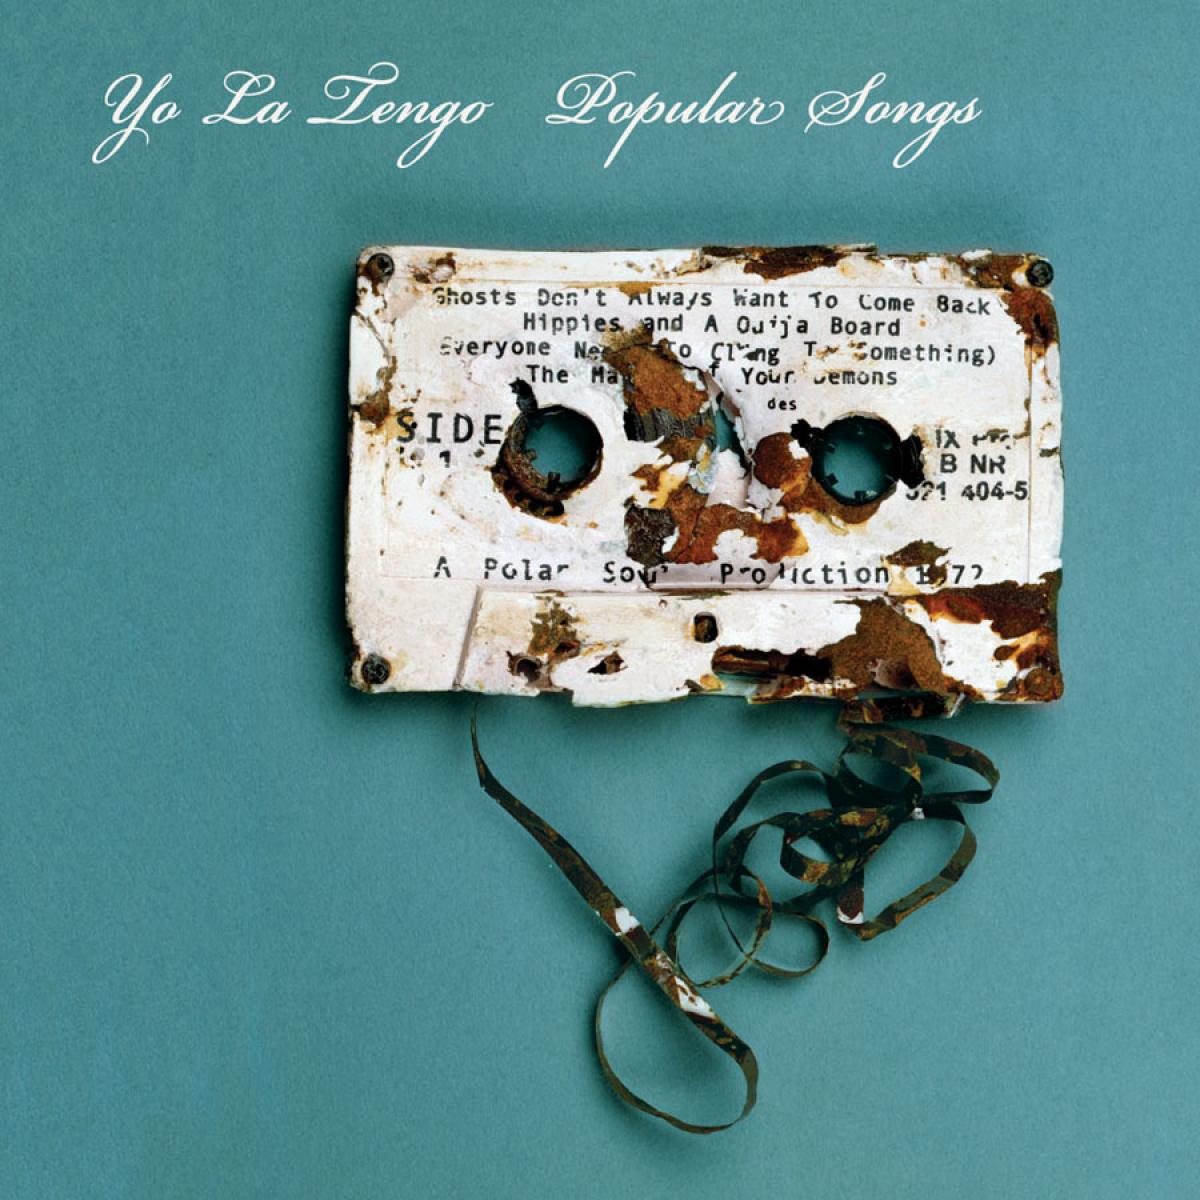 Yo La Tengo - Popular Songs - 744861085614 - LP's - Yellow Racket Records